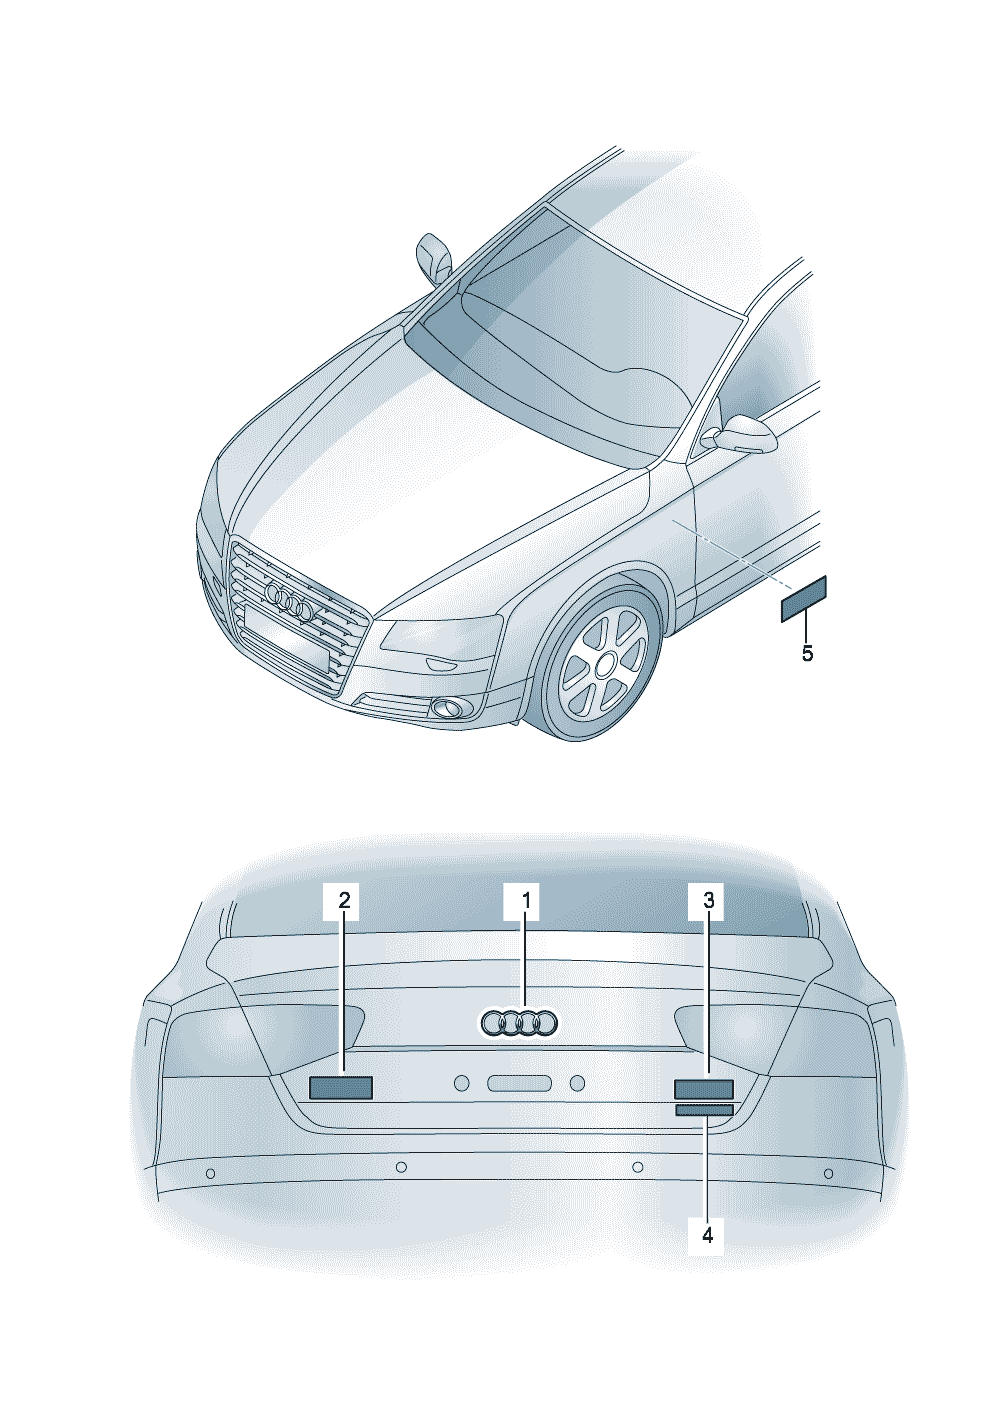 inscriptions/lettering rearside - Audi A8/S8 quattro - a8q